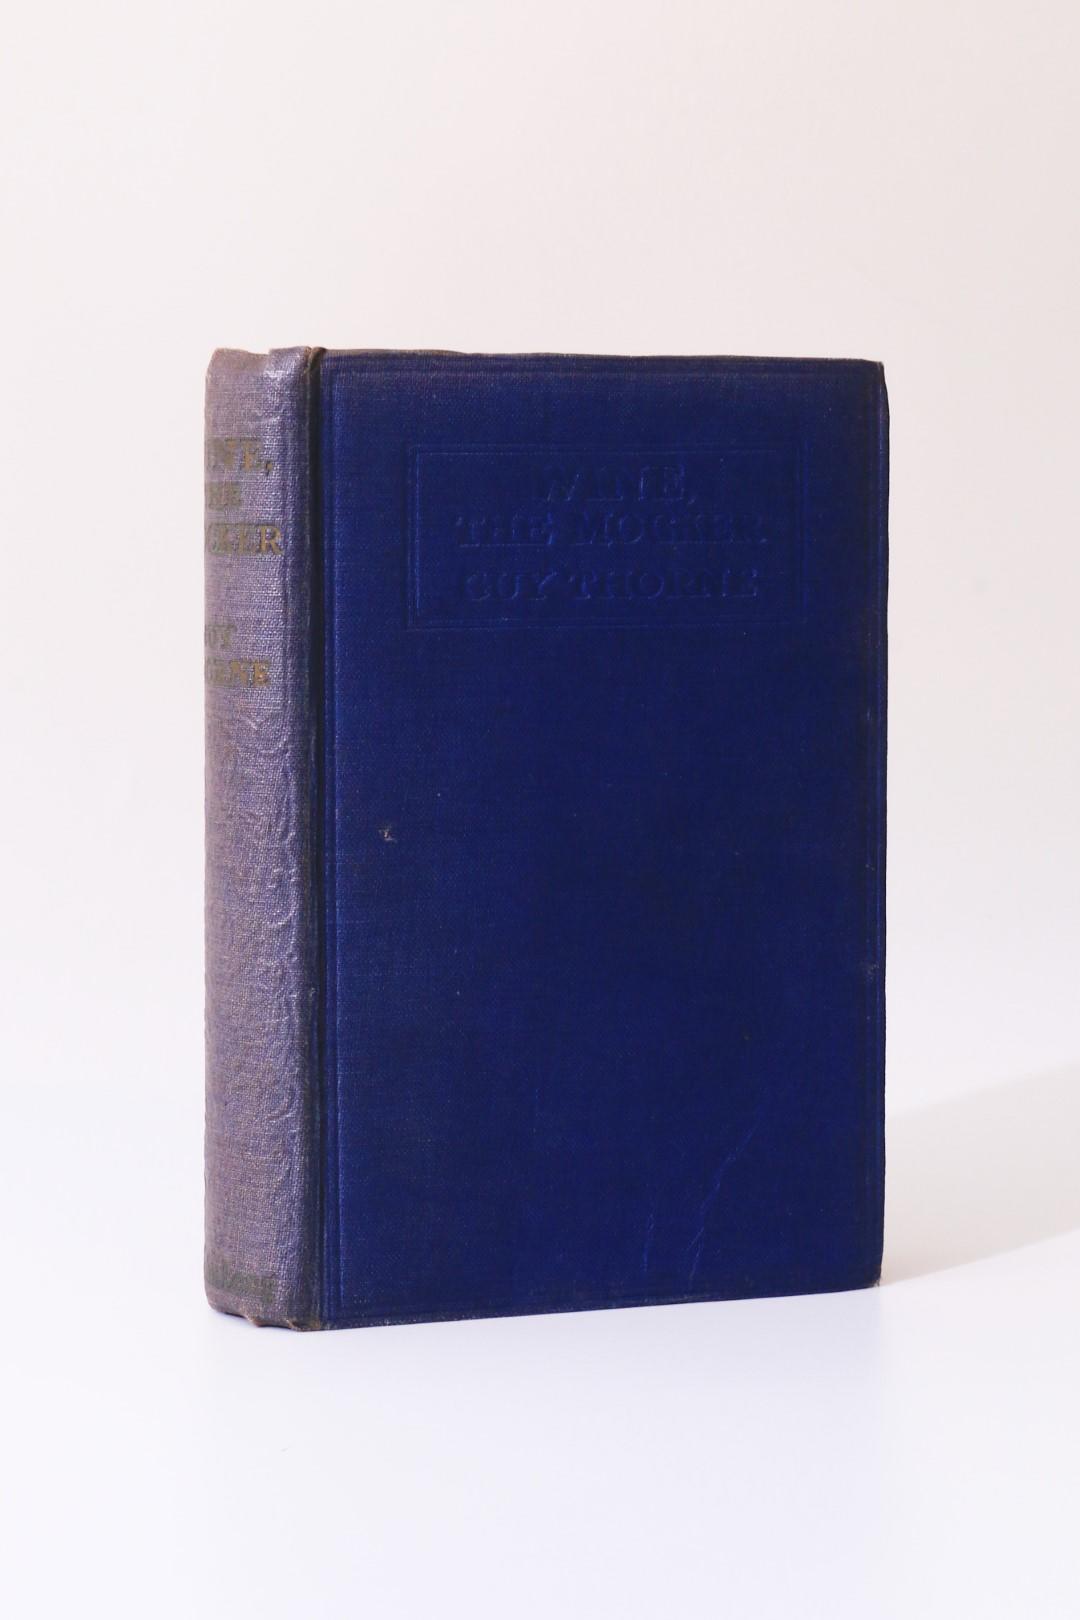 Guy Thorne - Wine the Mocker - John Long, n.d. [1919], Signed First Edition.